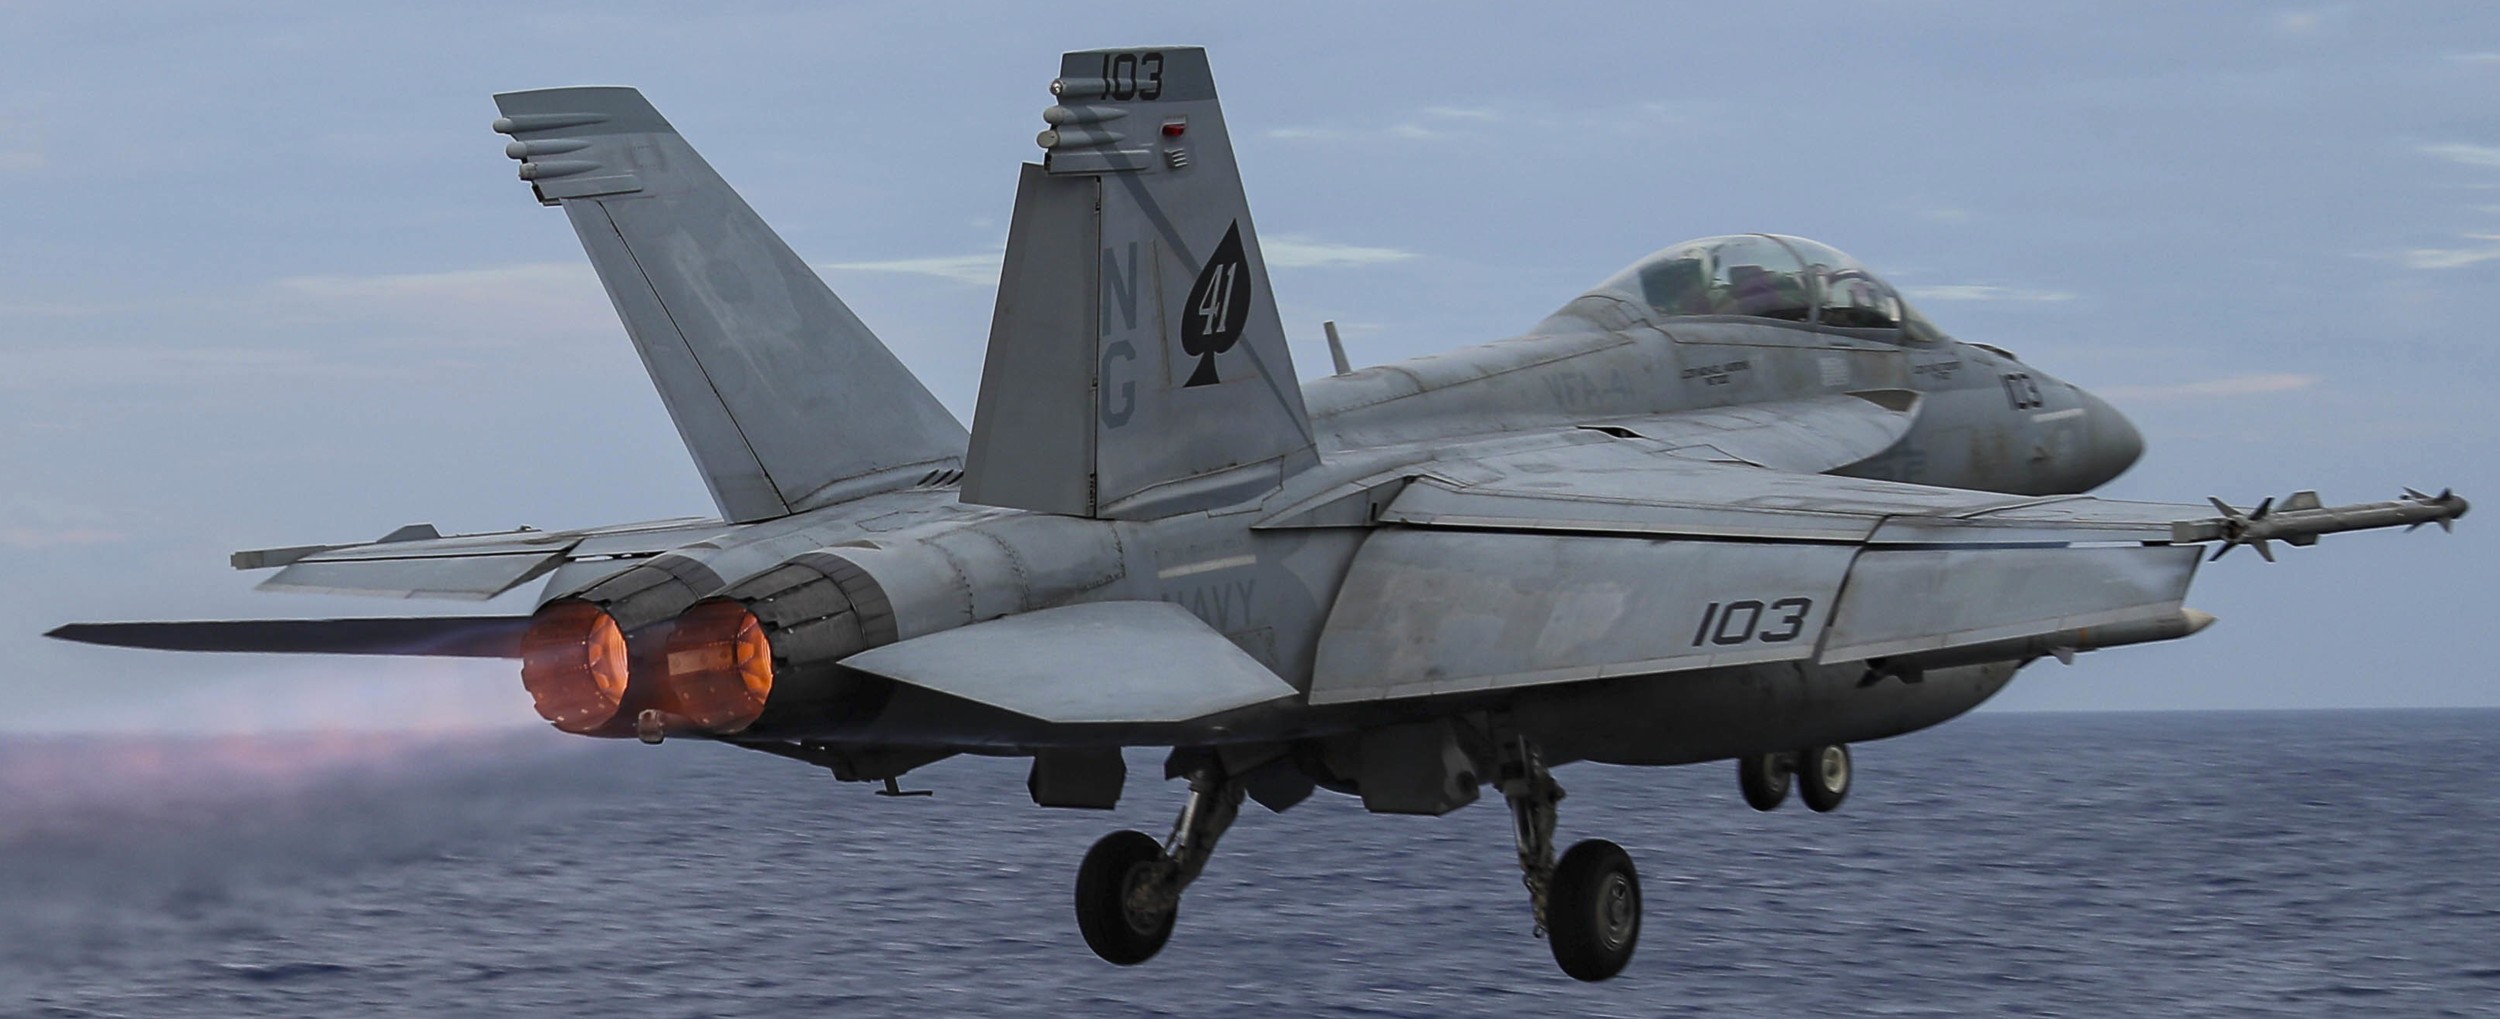 vfa-41 black aces strike fighter squadron f/a-18f super hornet cvw-9 cvn-72 uss abraham lincoln us navy 85